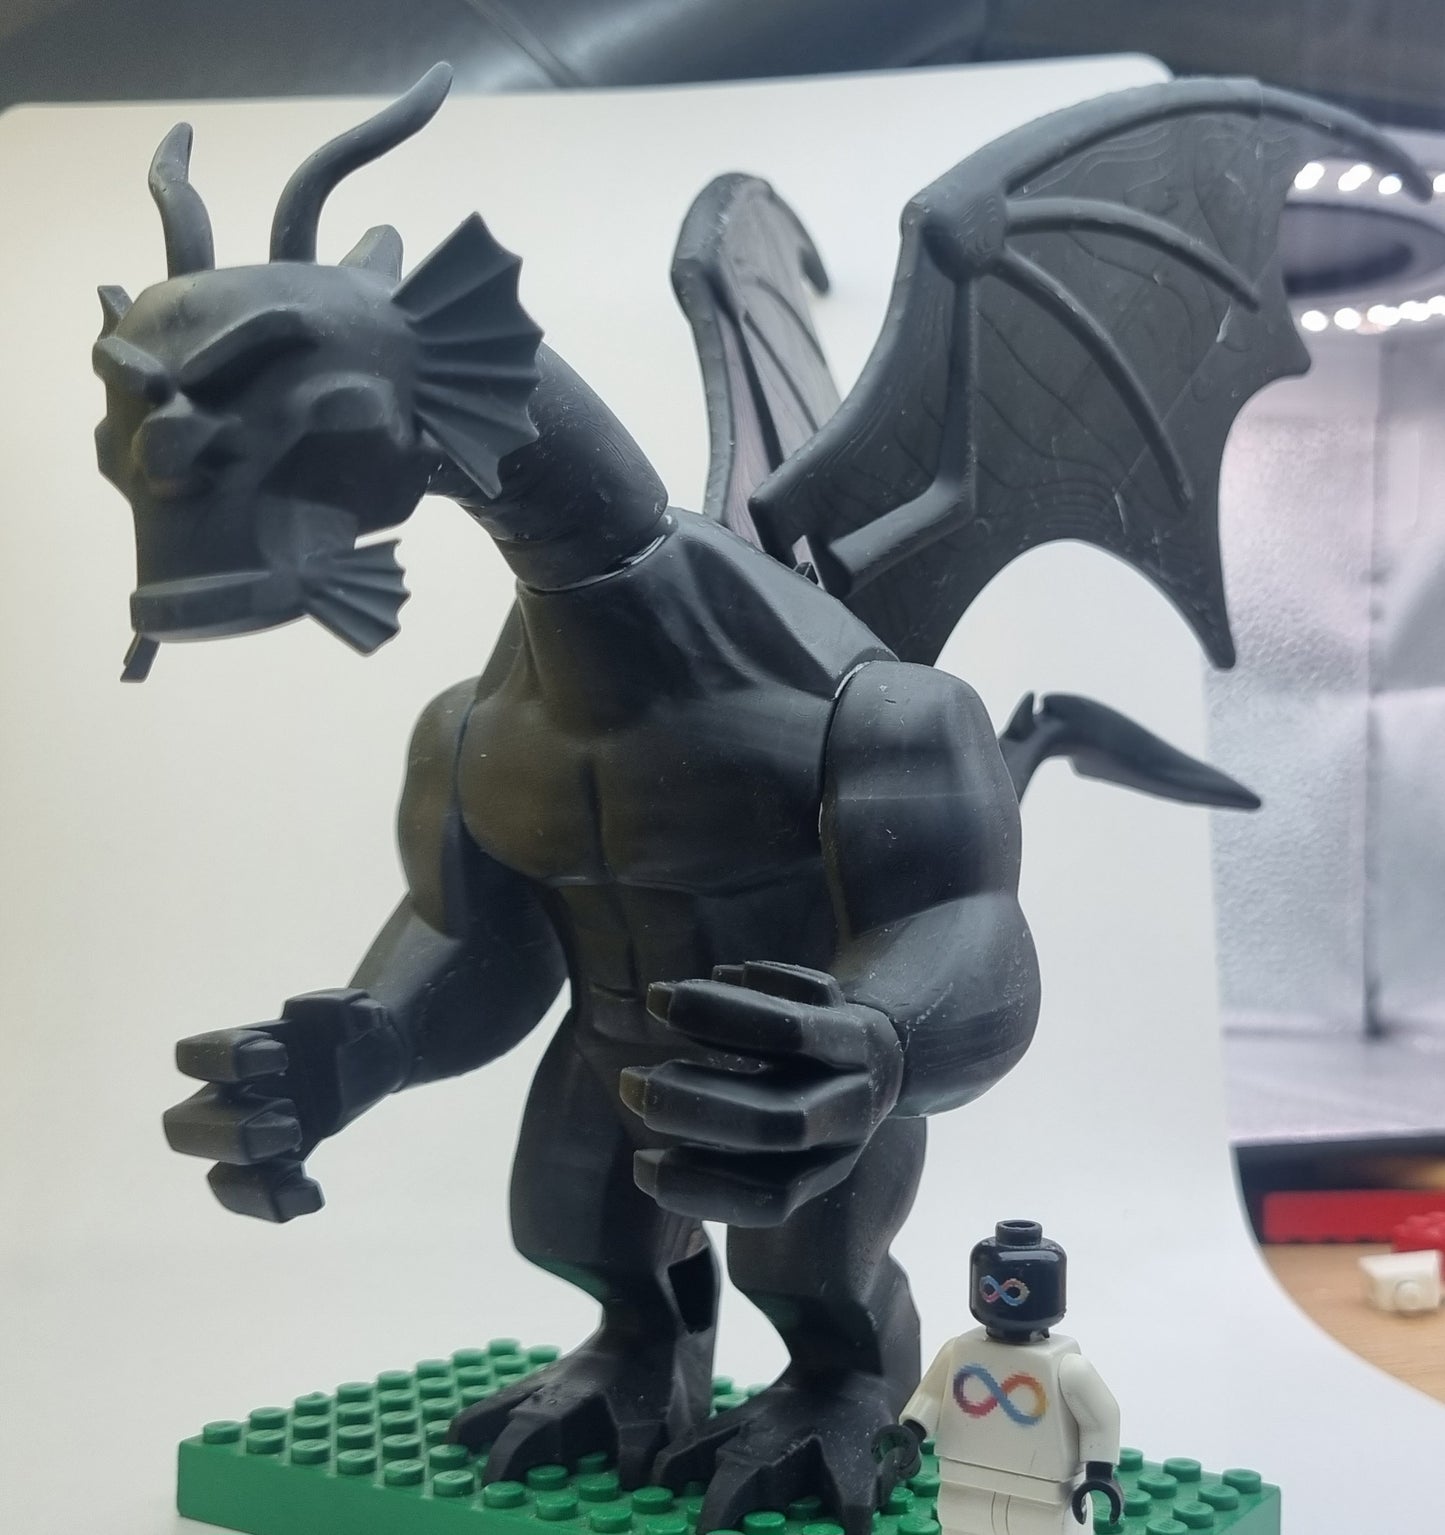 Building toy custom 3D printed huge green dragon!